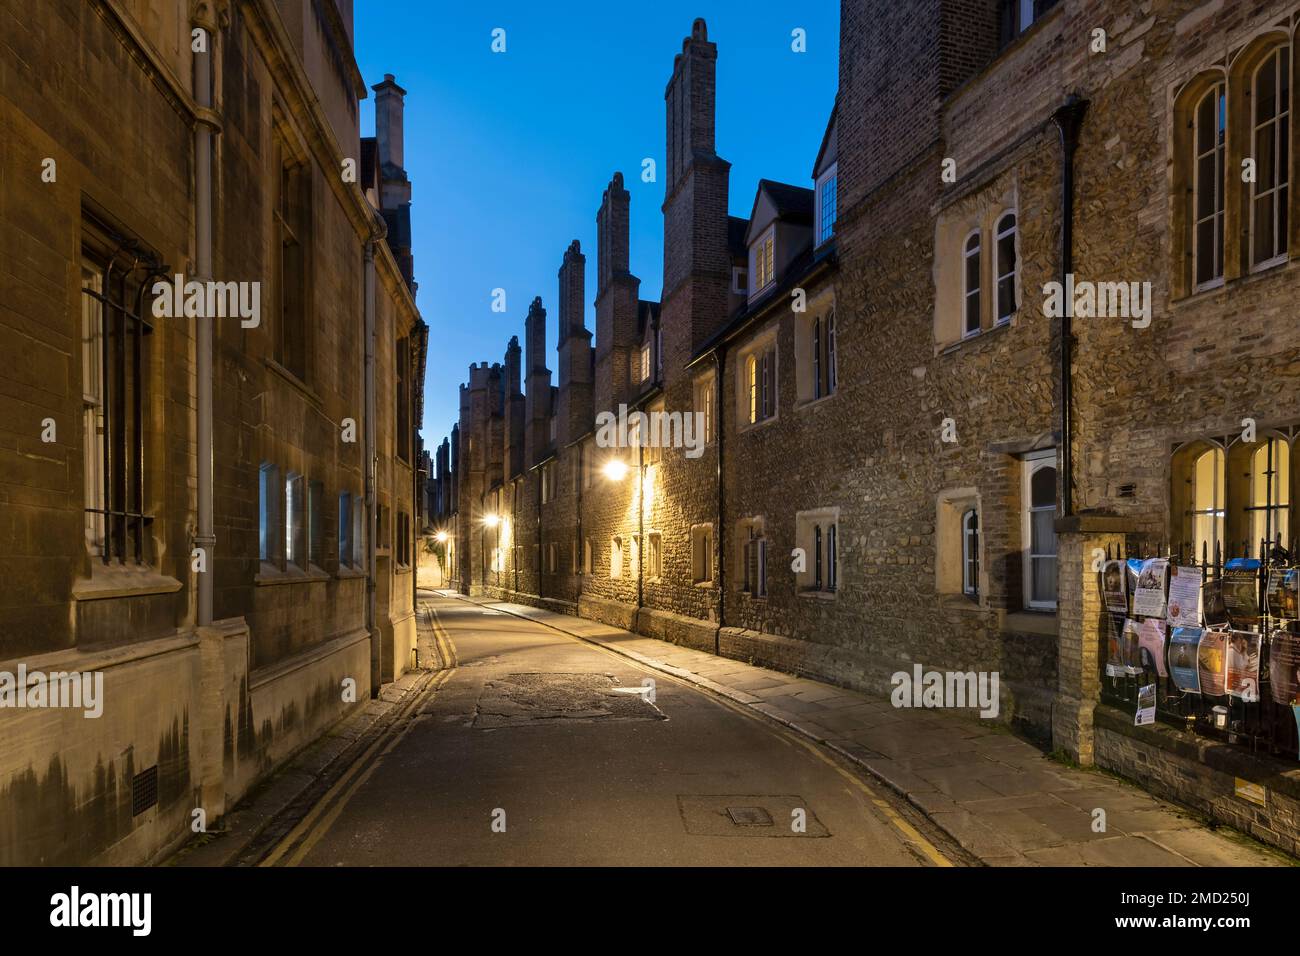 Red Brick Tudor Buildings with tall chimney stacks on Trinity Lane at night, Cambridge, Cambridgeshire, England, UK Stock Photo